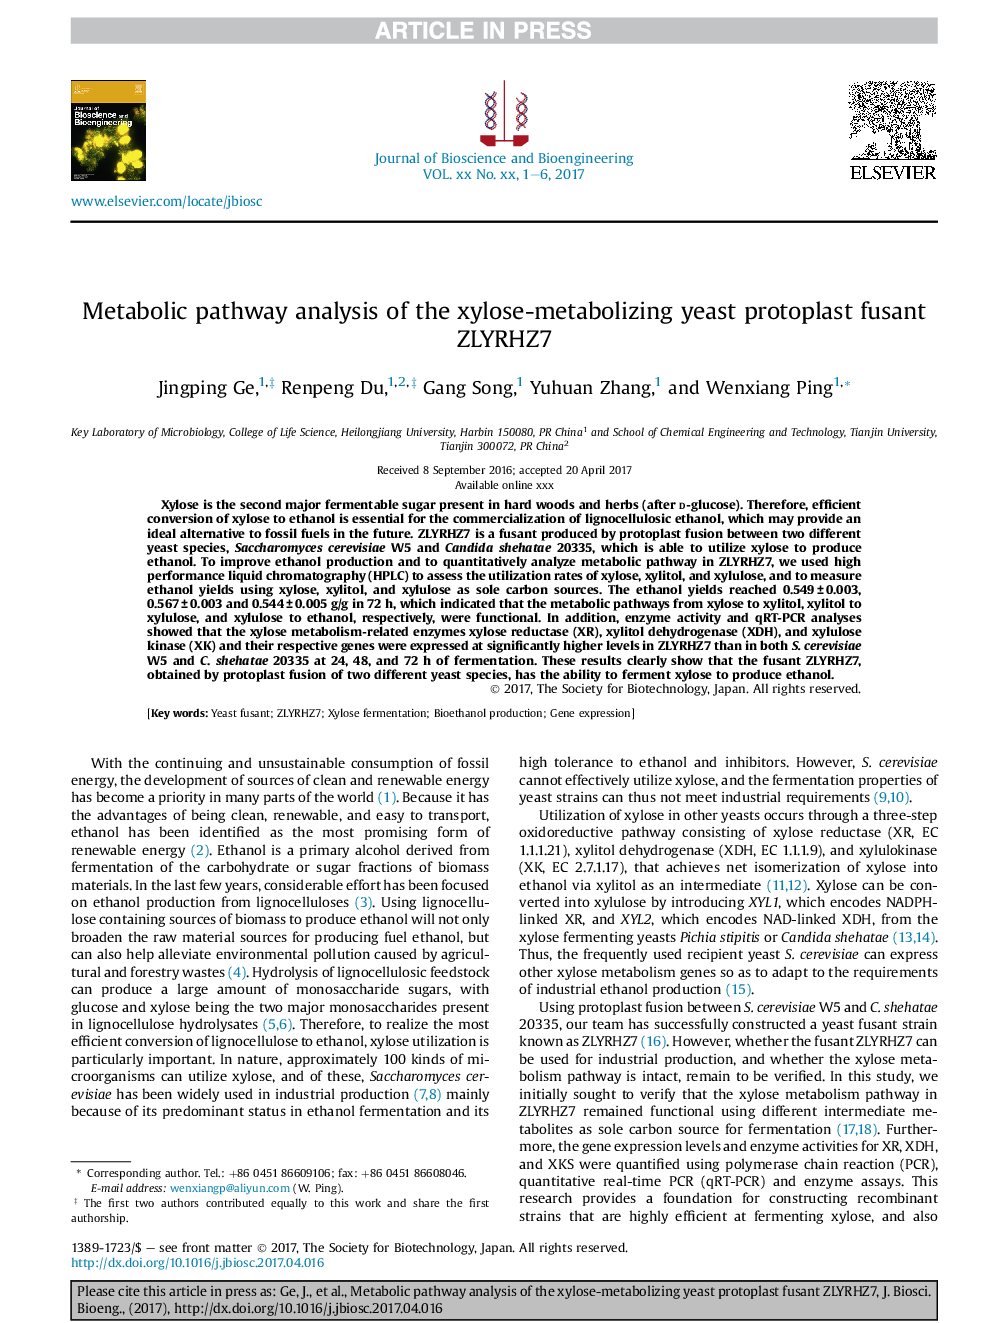 Metabolic pathway analysis of the xylose-metabolizing yeast protoplast fusant ZLYRHZ7